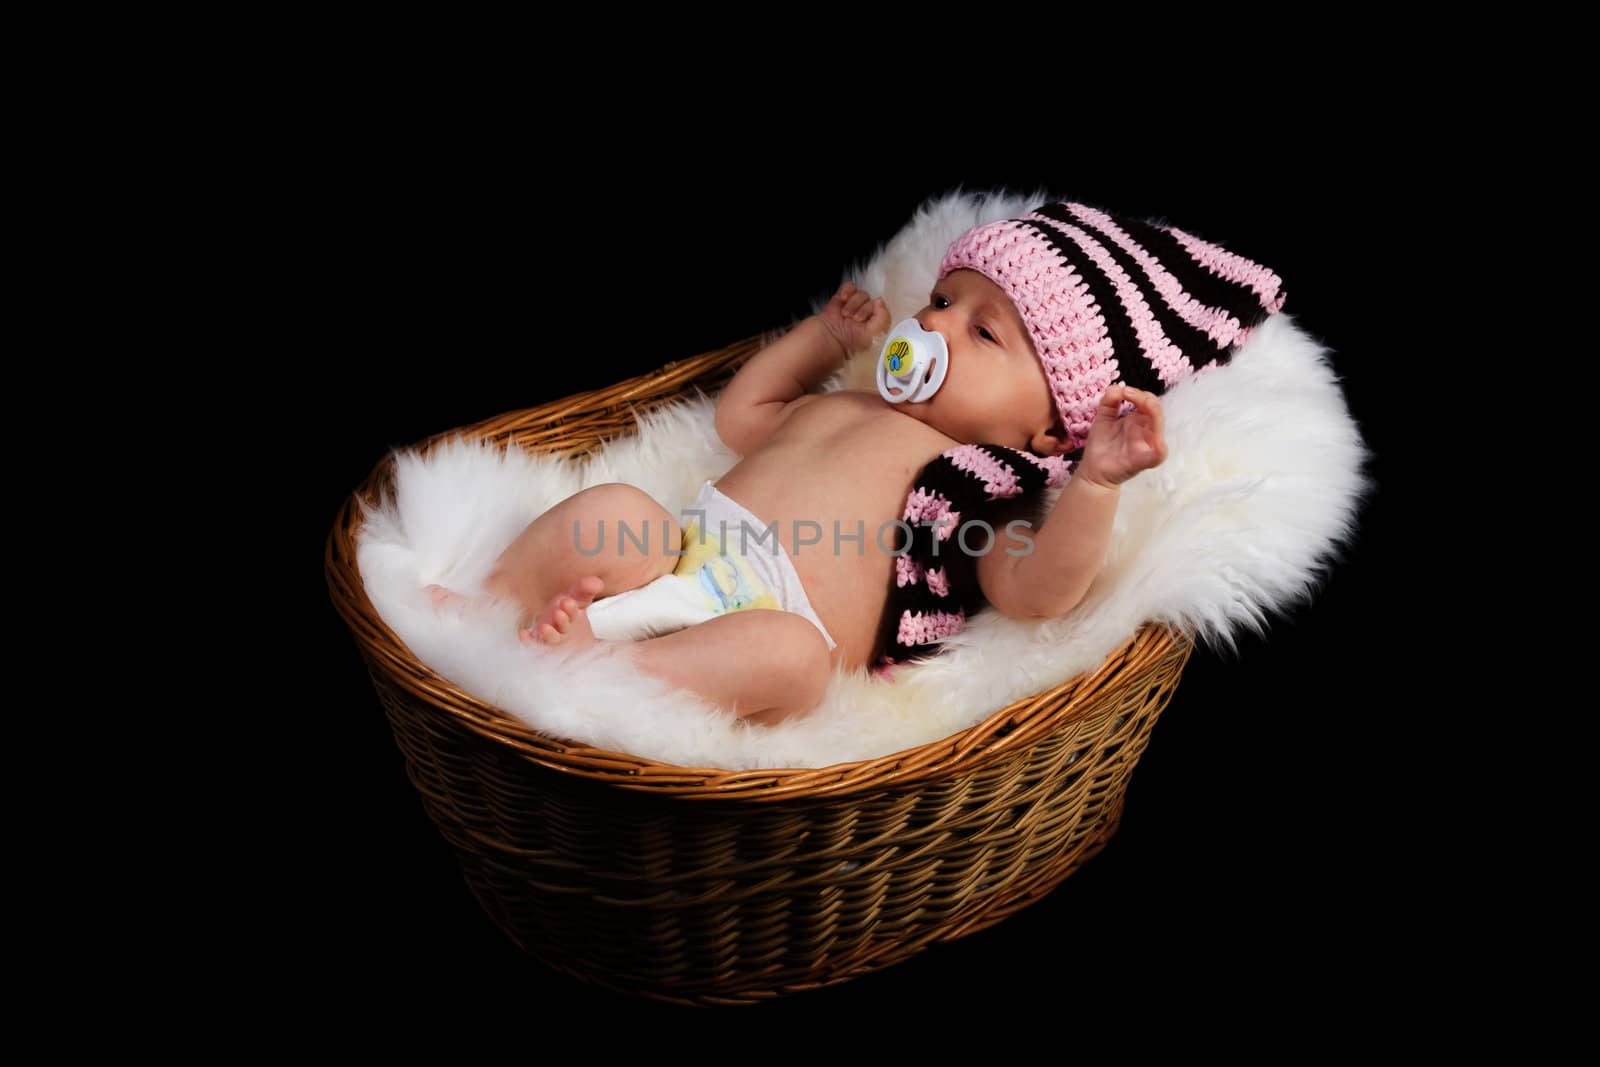 Newborn Child in a wicker basket on a black background. by sk11303